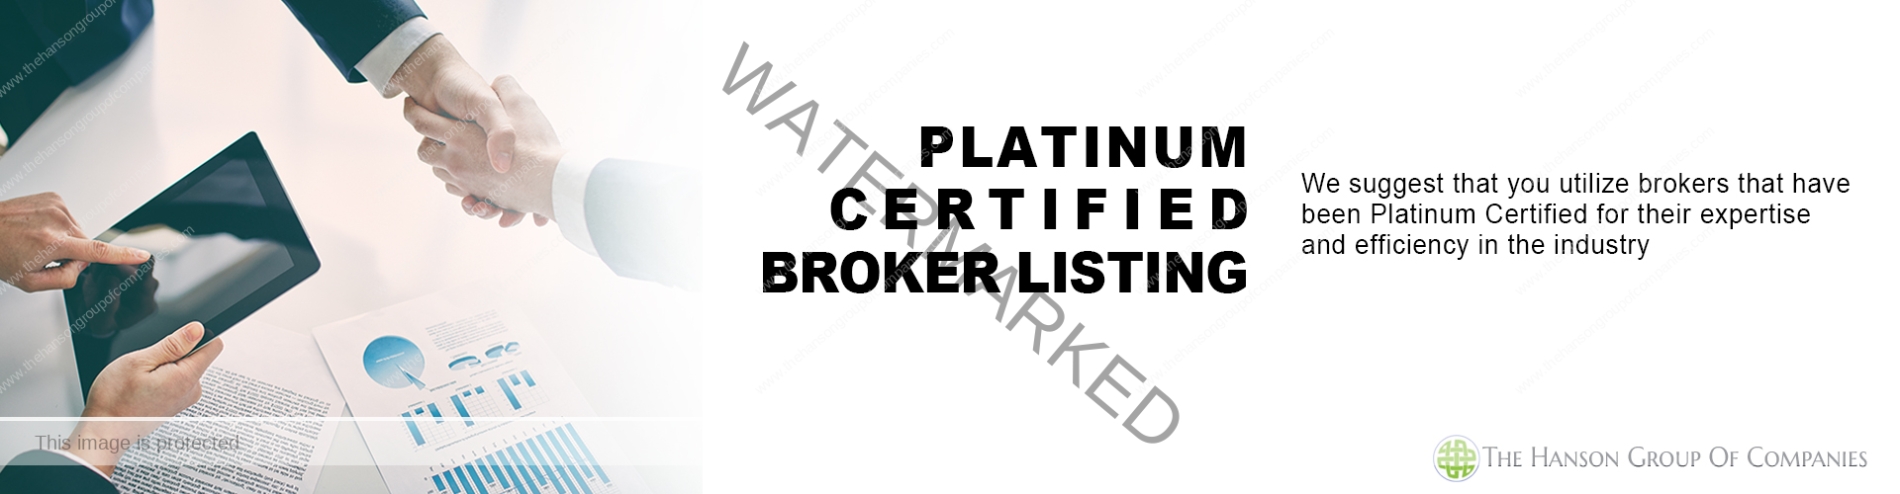 platinum-certified-broker-listing